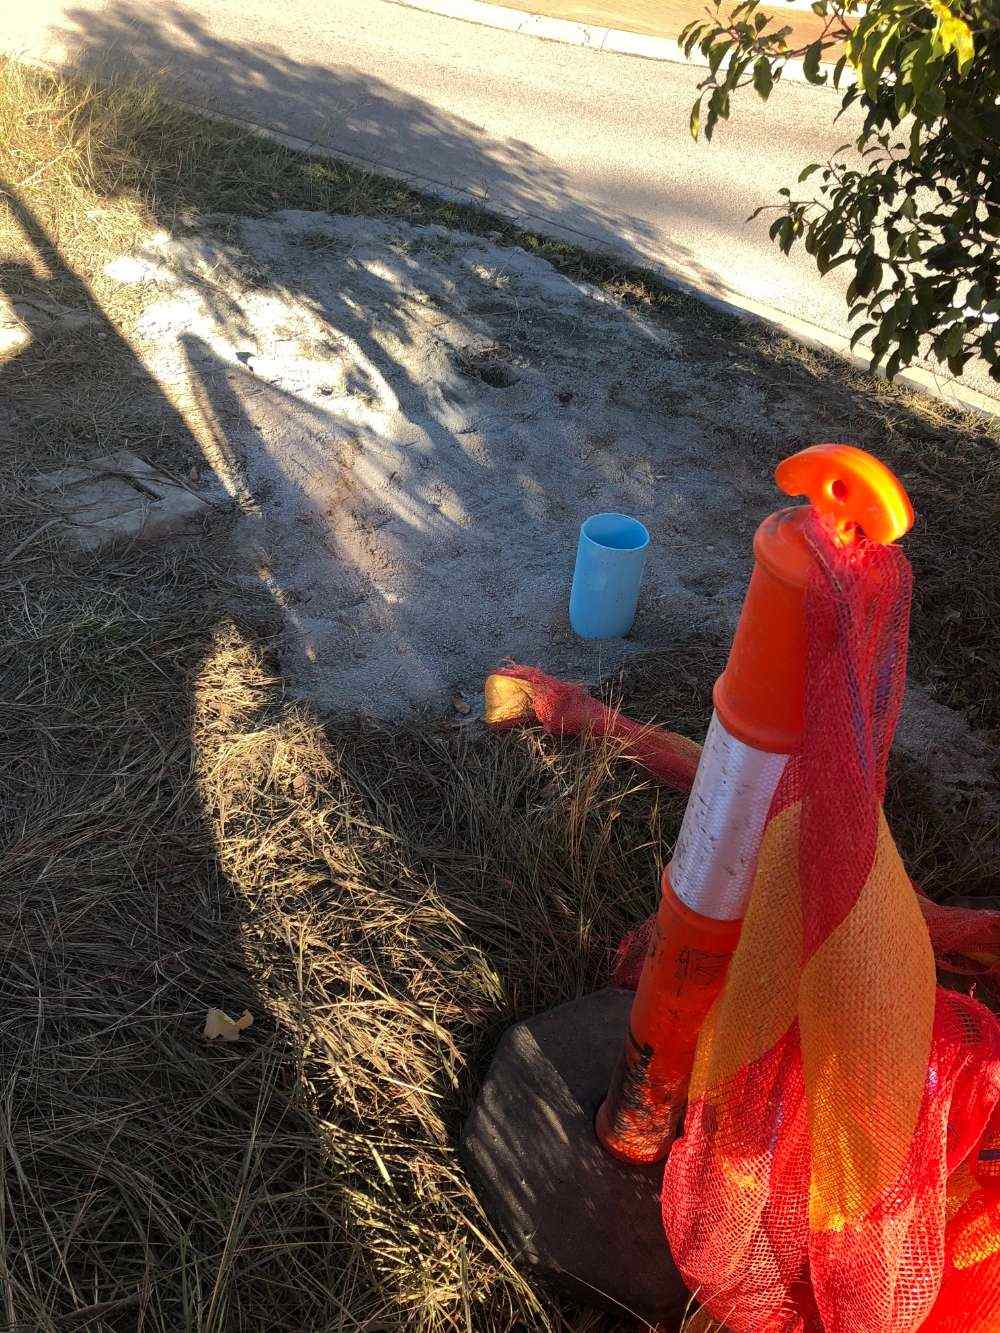 Burst pipe 5- Emergency Fix in Townsville